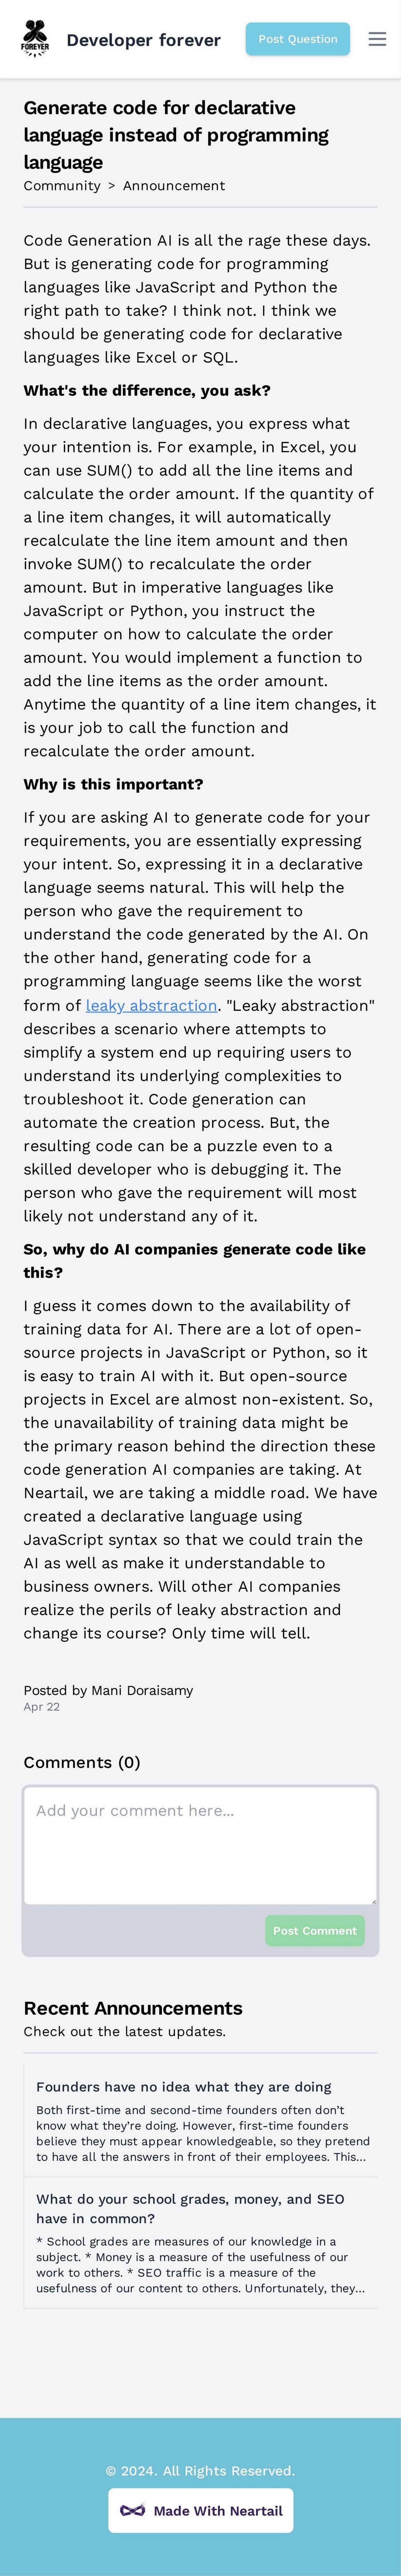 Generate code for declarative language instead of programming language